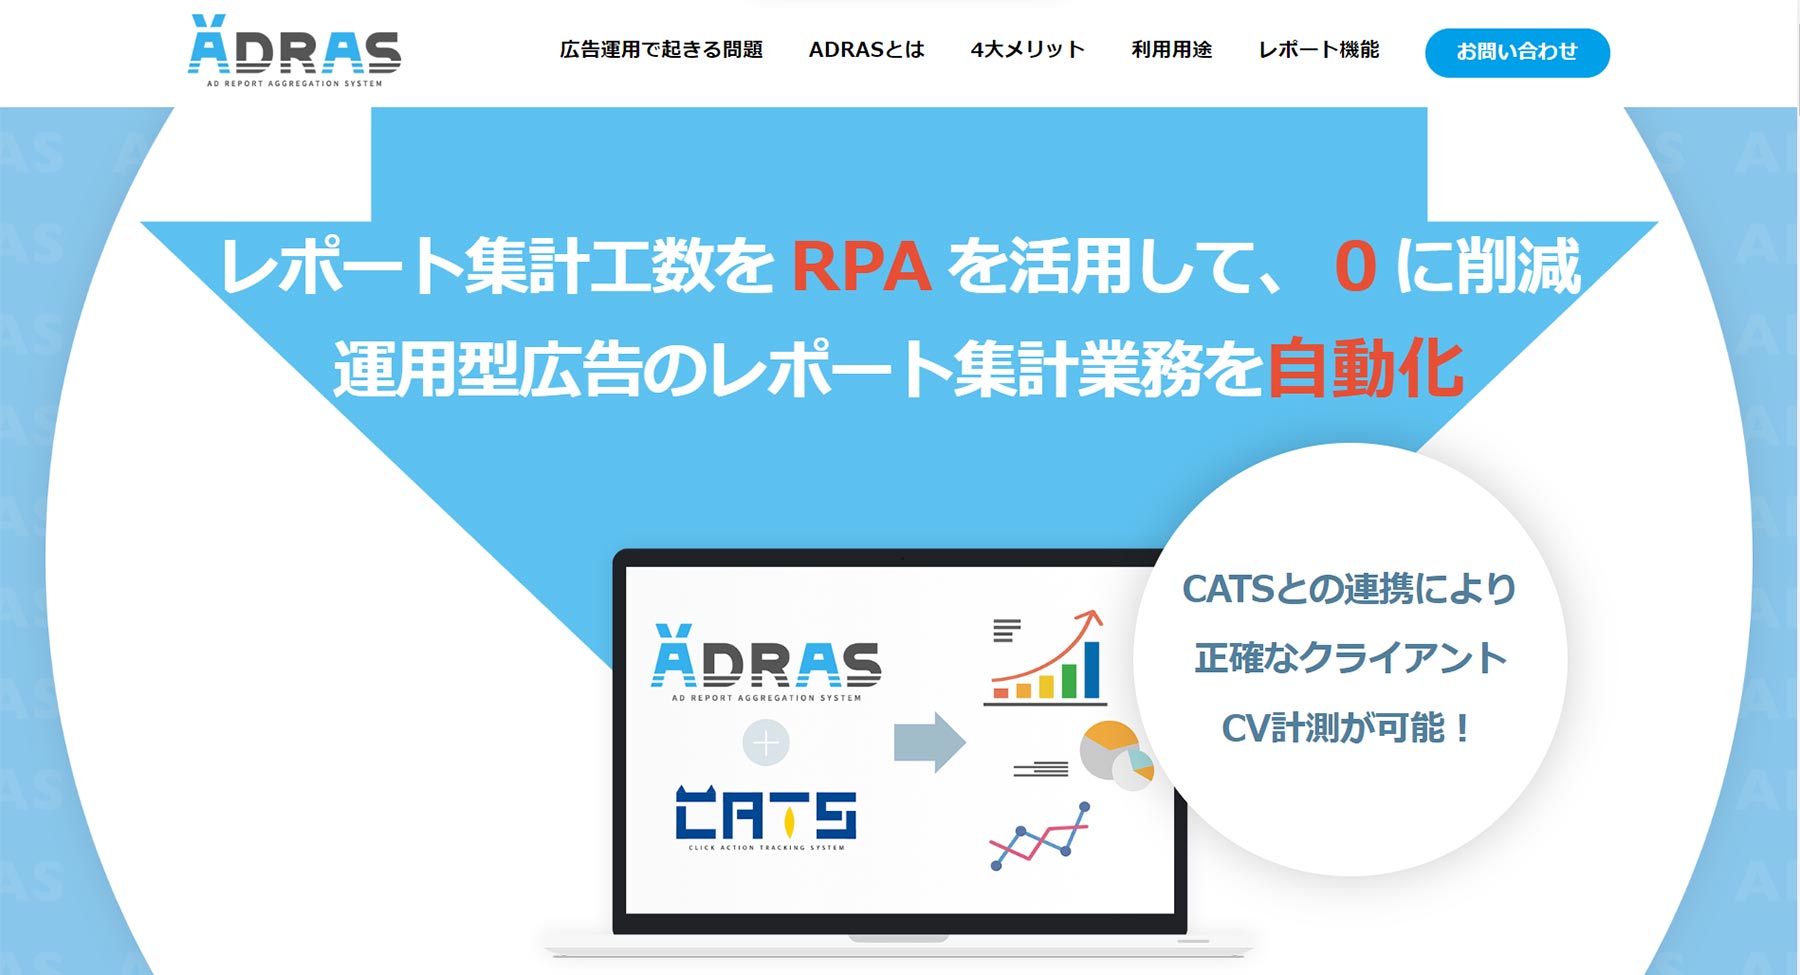 ADRAS公式Webサイト